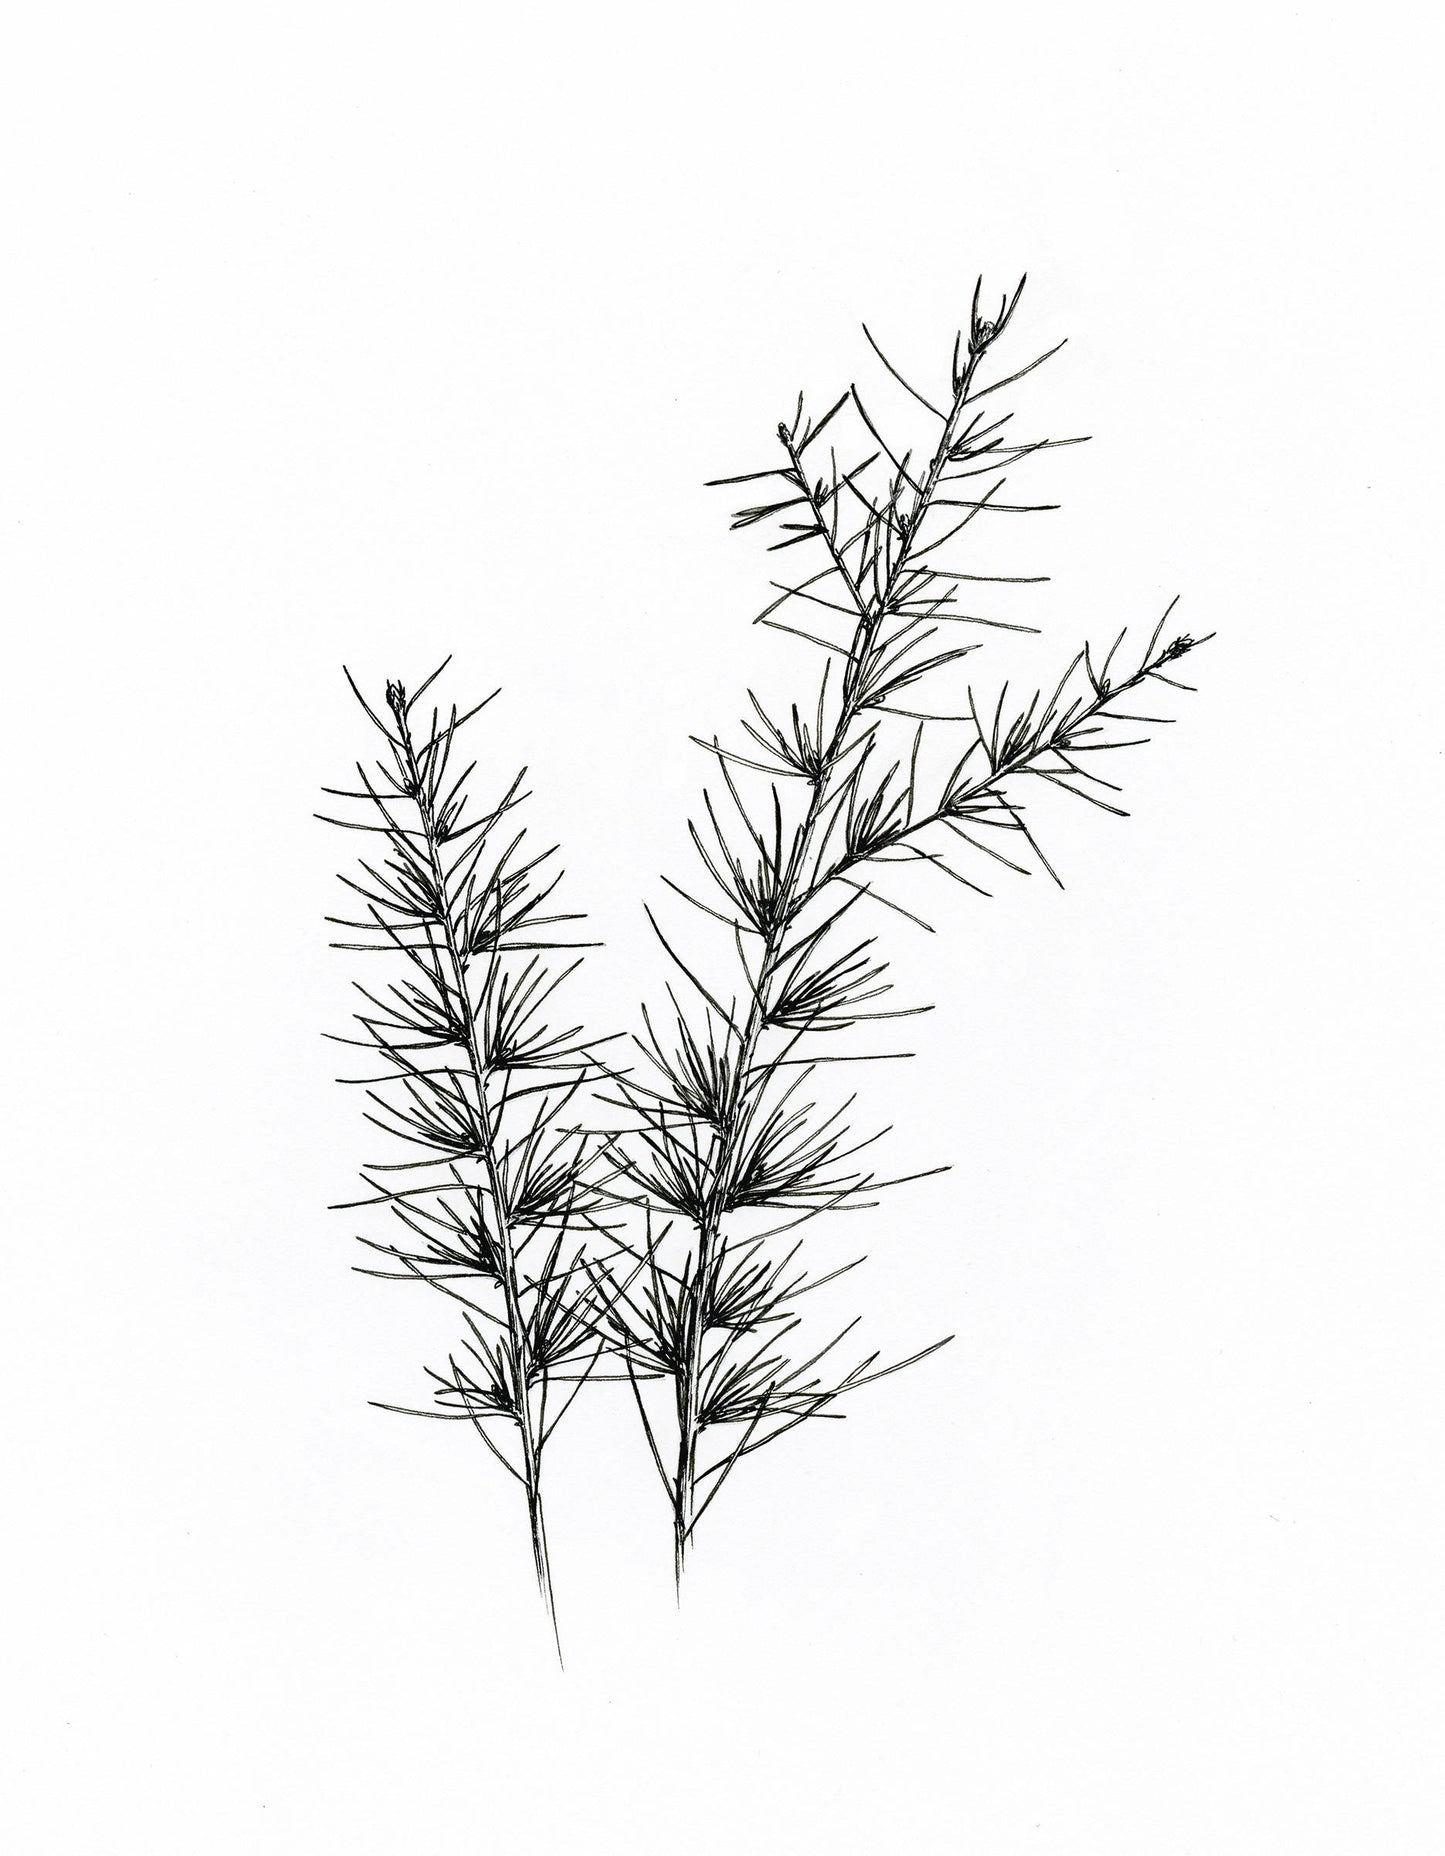 'Pine branch' Original Ink Illustration. 8x10in